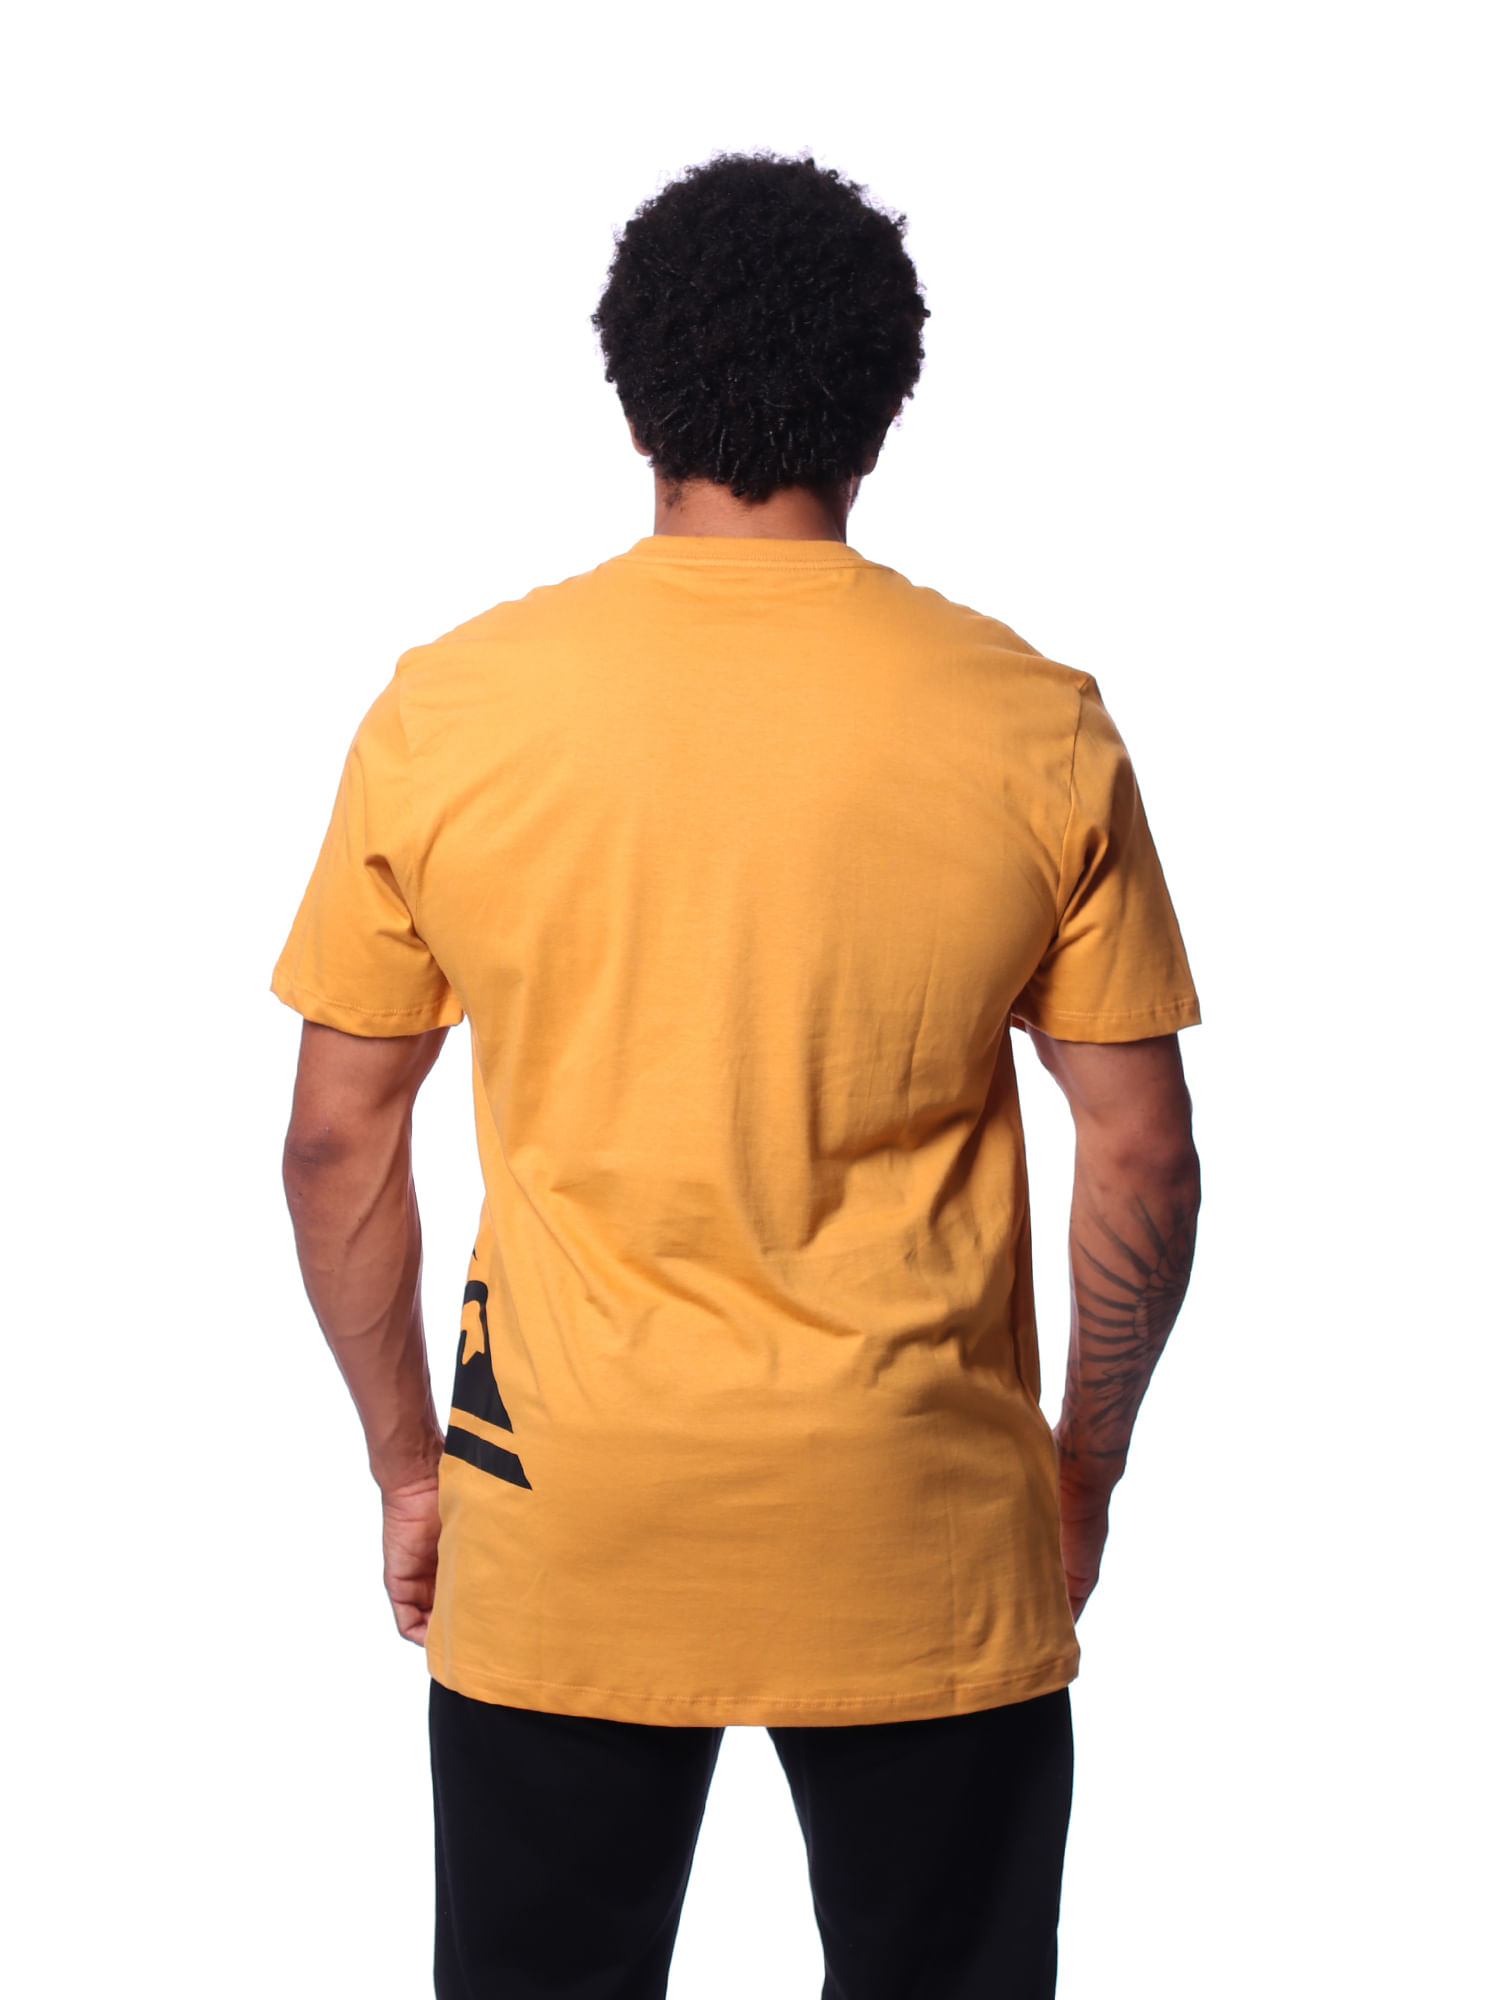 Camiseta-quiksilver-side-logo-Amarelo